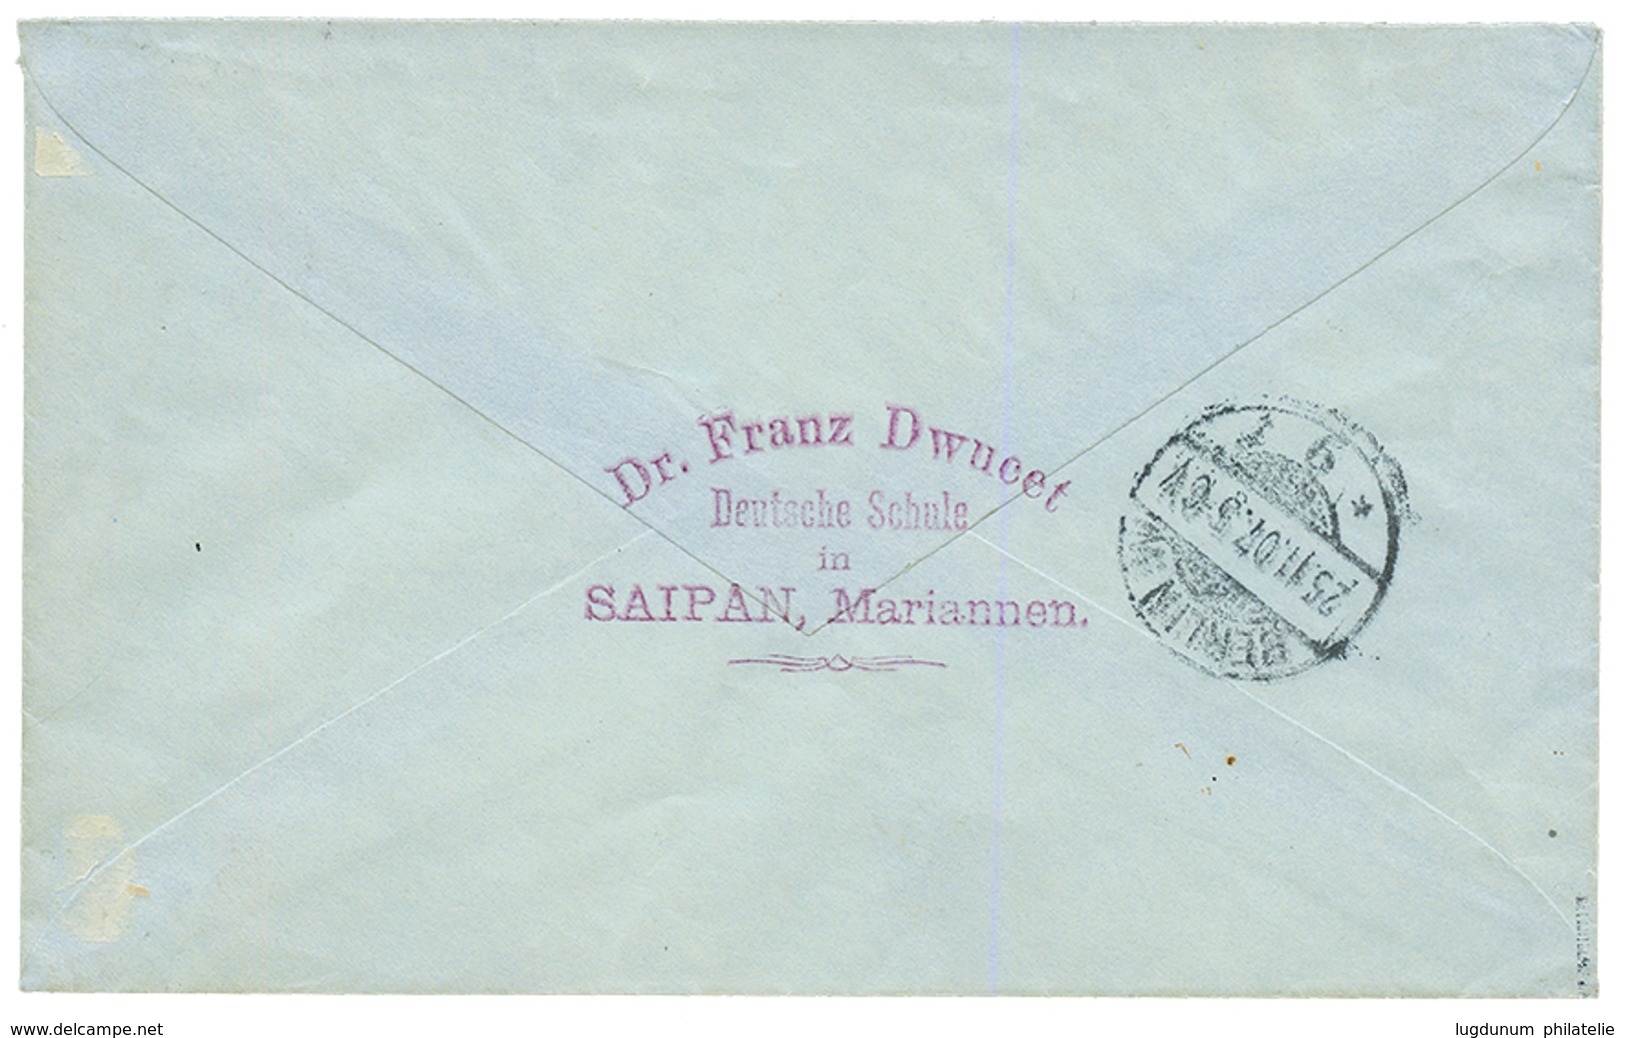 MARIANES : 1907 10pf Canc. SAIPAN MARIANEN On Envelope (DEUTSCHE SCHULE SAIPAN) To BERLIN. Signed LANTELME. Vvf. - Islas Maríanas